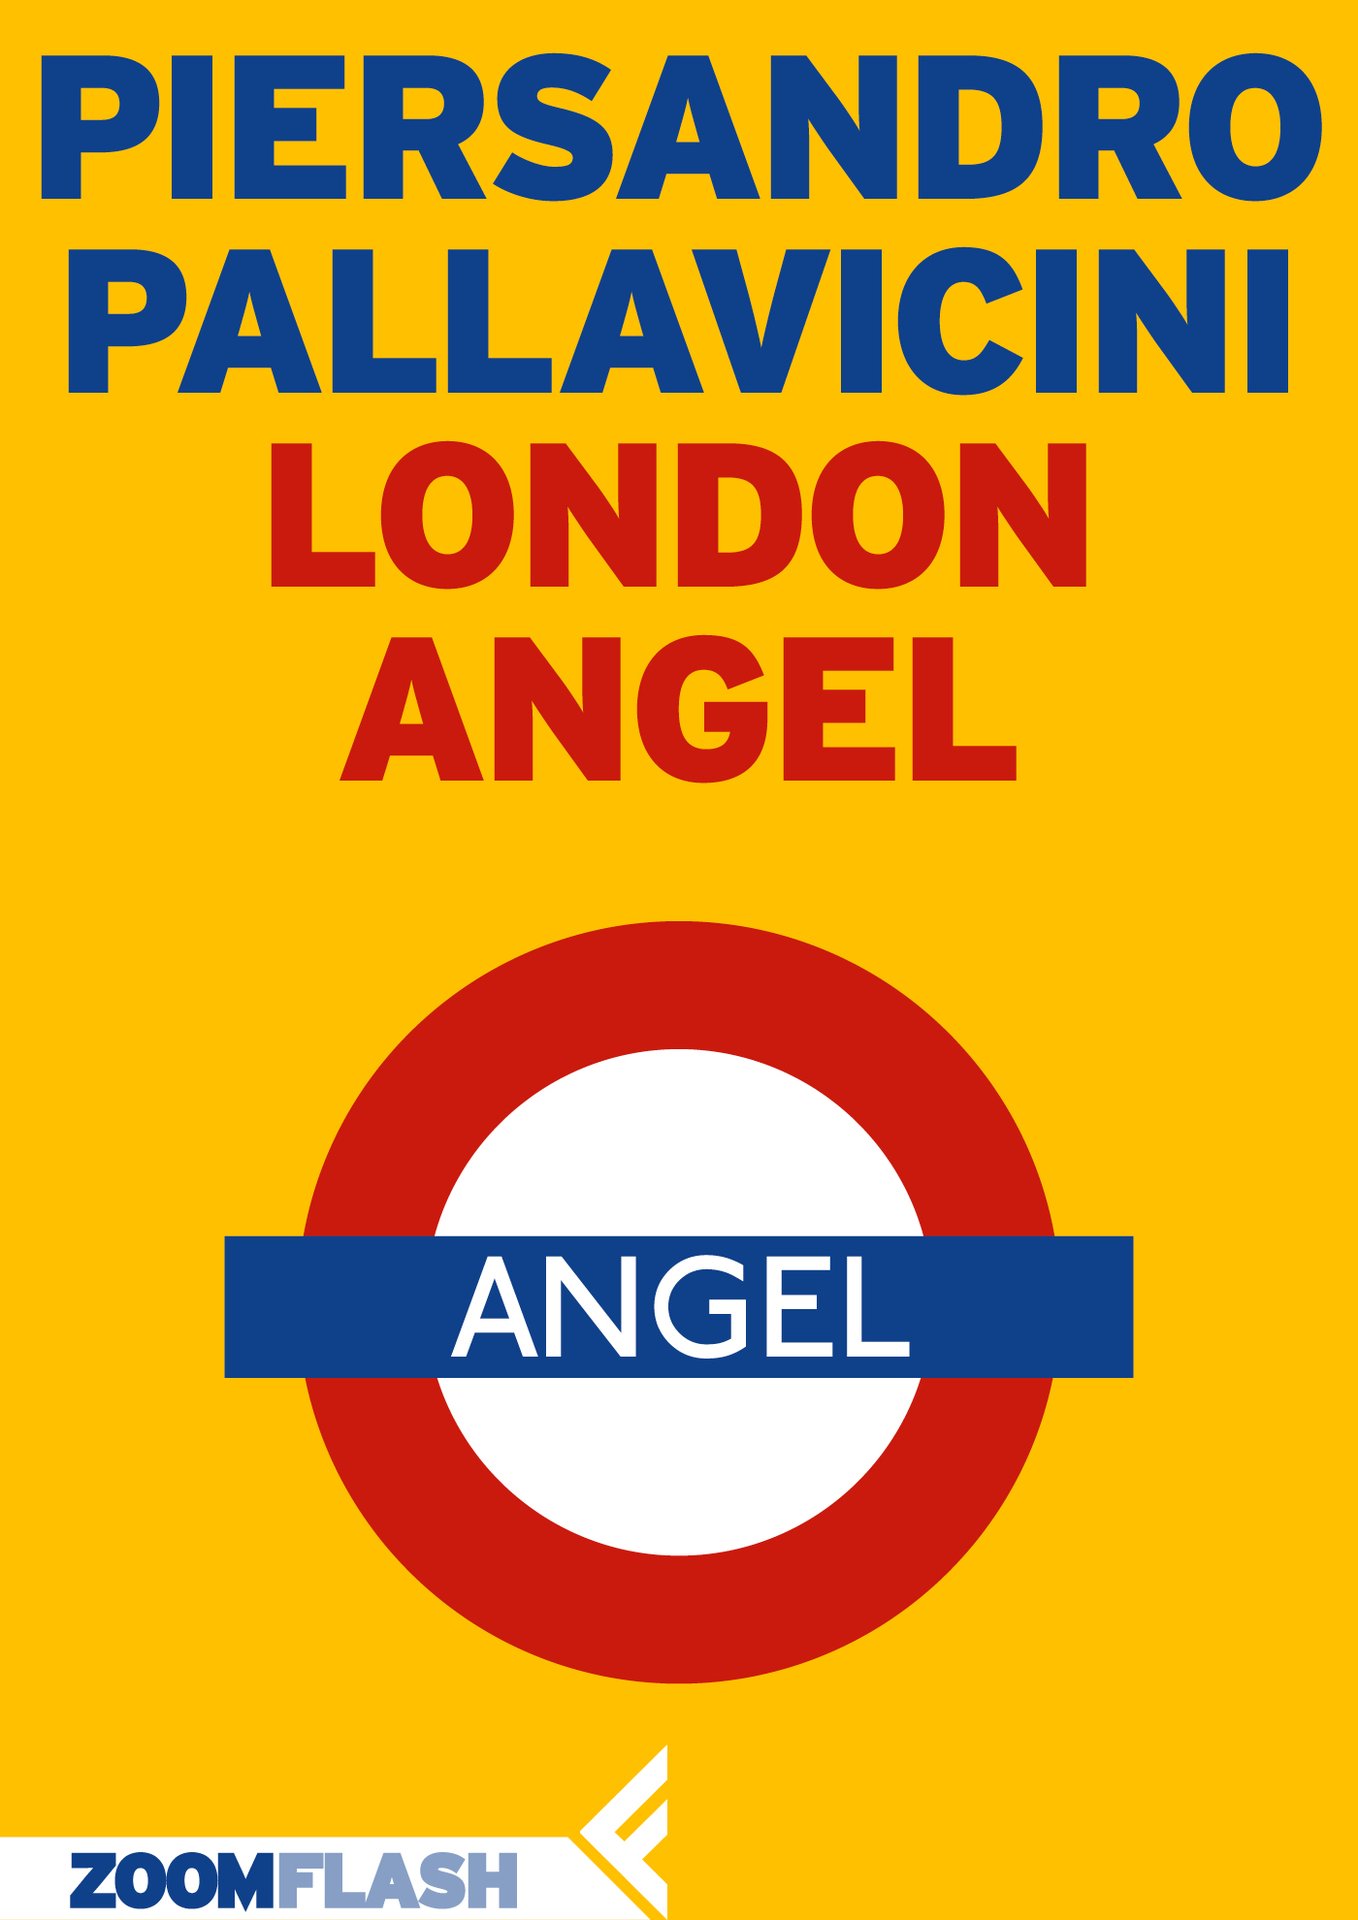 London Angel